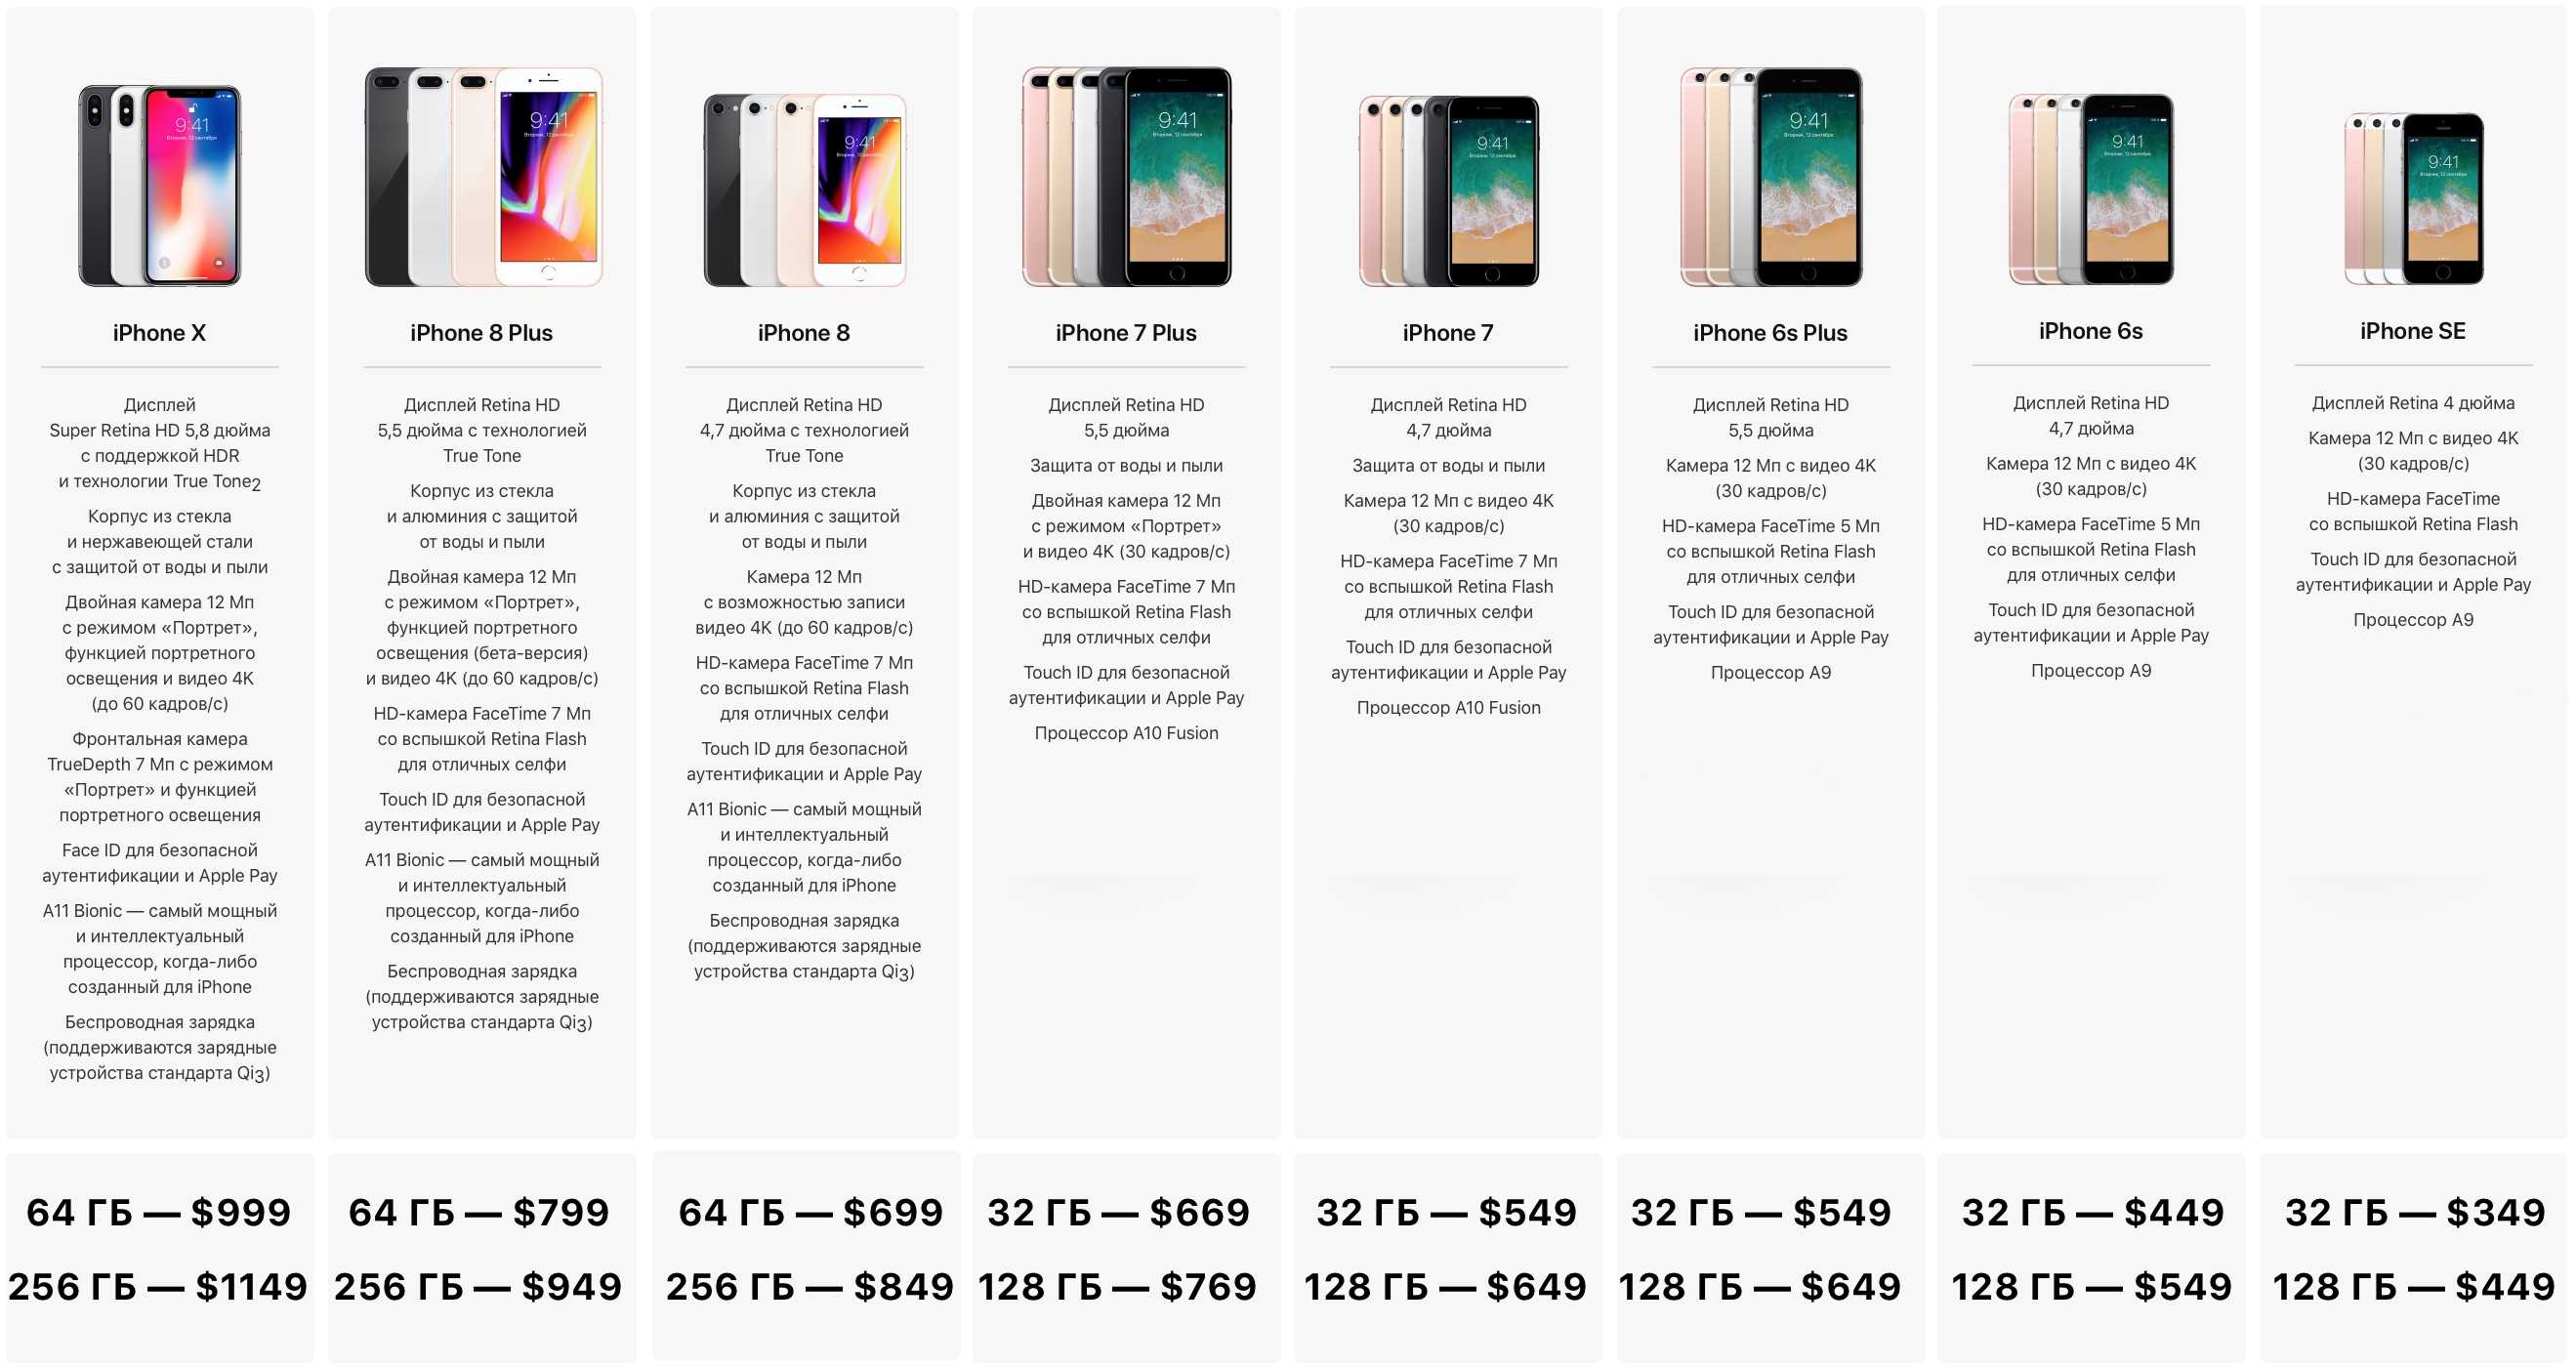 Iphone 7 plus динамика цен. Iphone характеристики всех моделей. Iphone характеристики всех моделей таблица 11. Характеристики айфонов в таблице. Iphone сравнение моделей таблица.